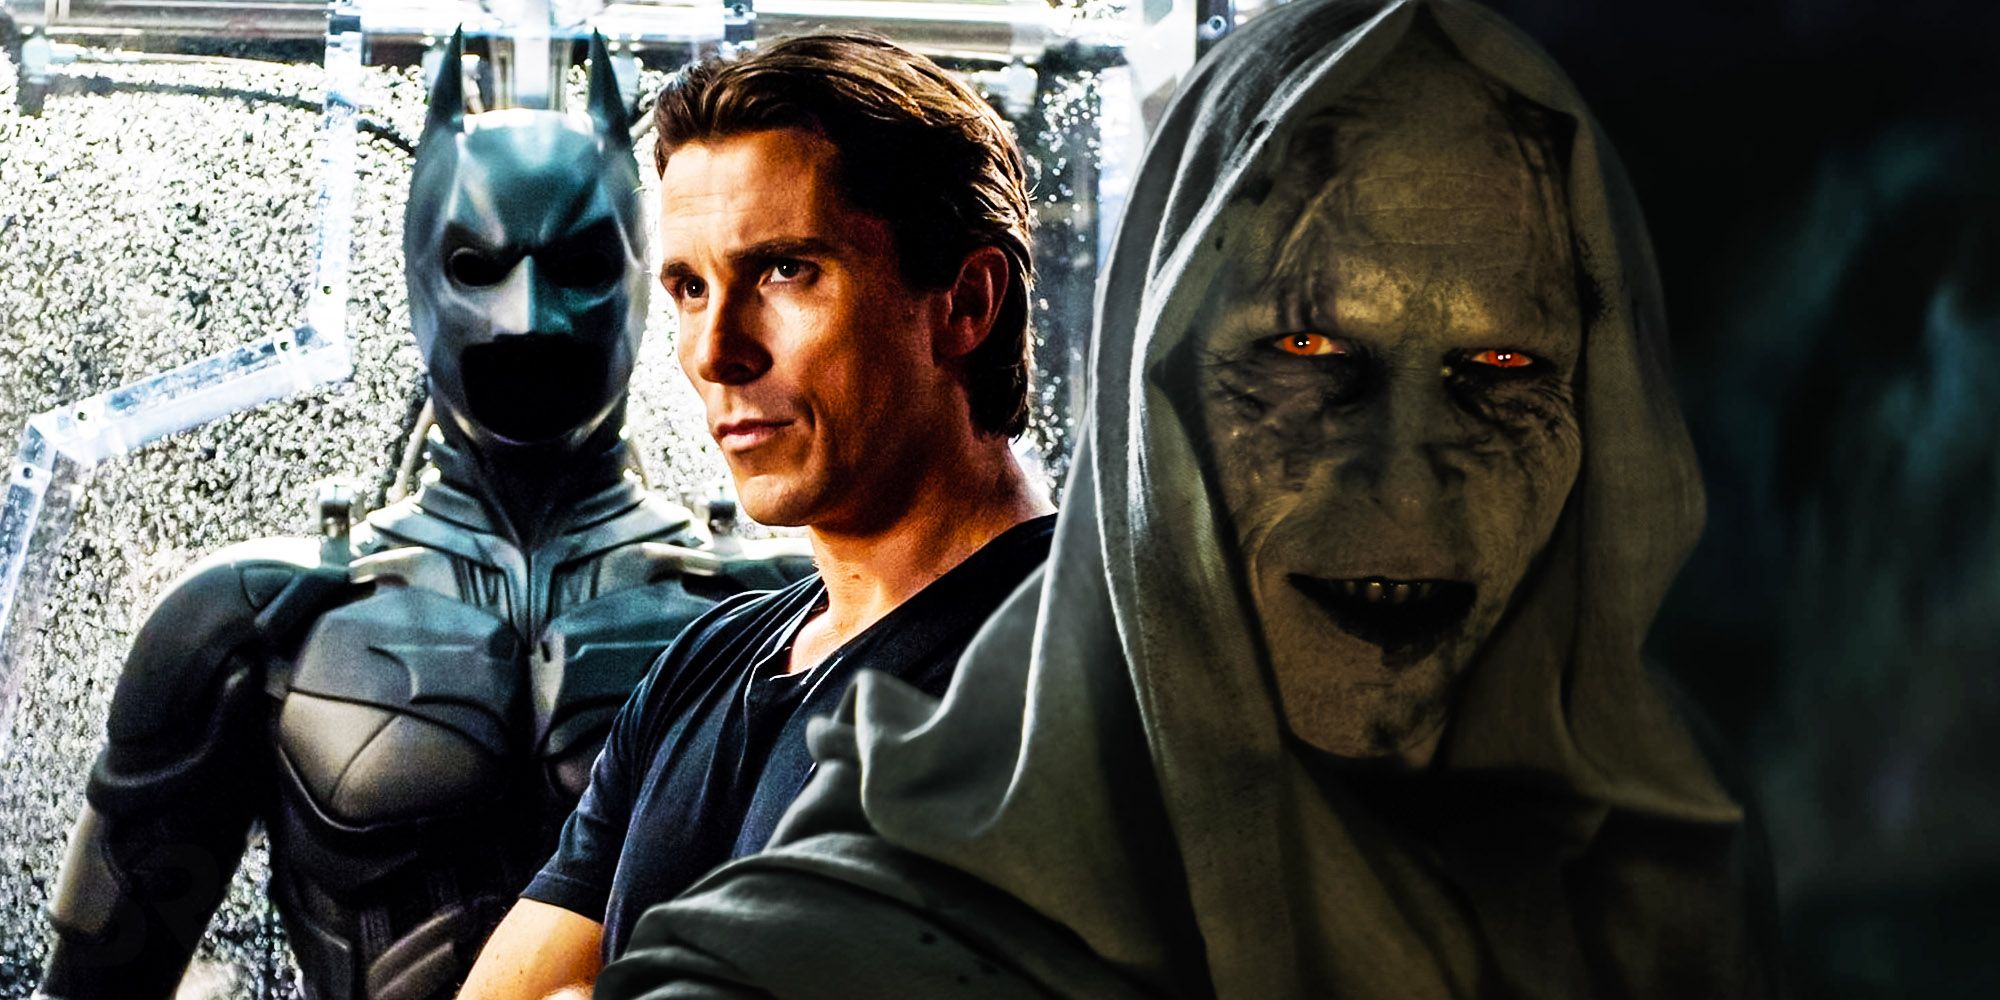 Christian Bale Superhero movies batman dark knight thor love and thunder gorr